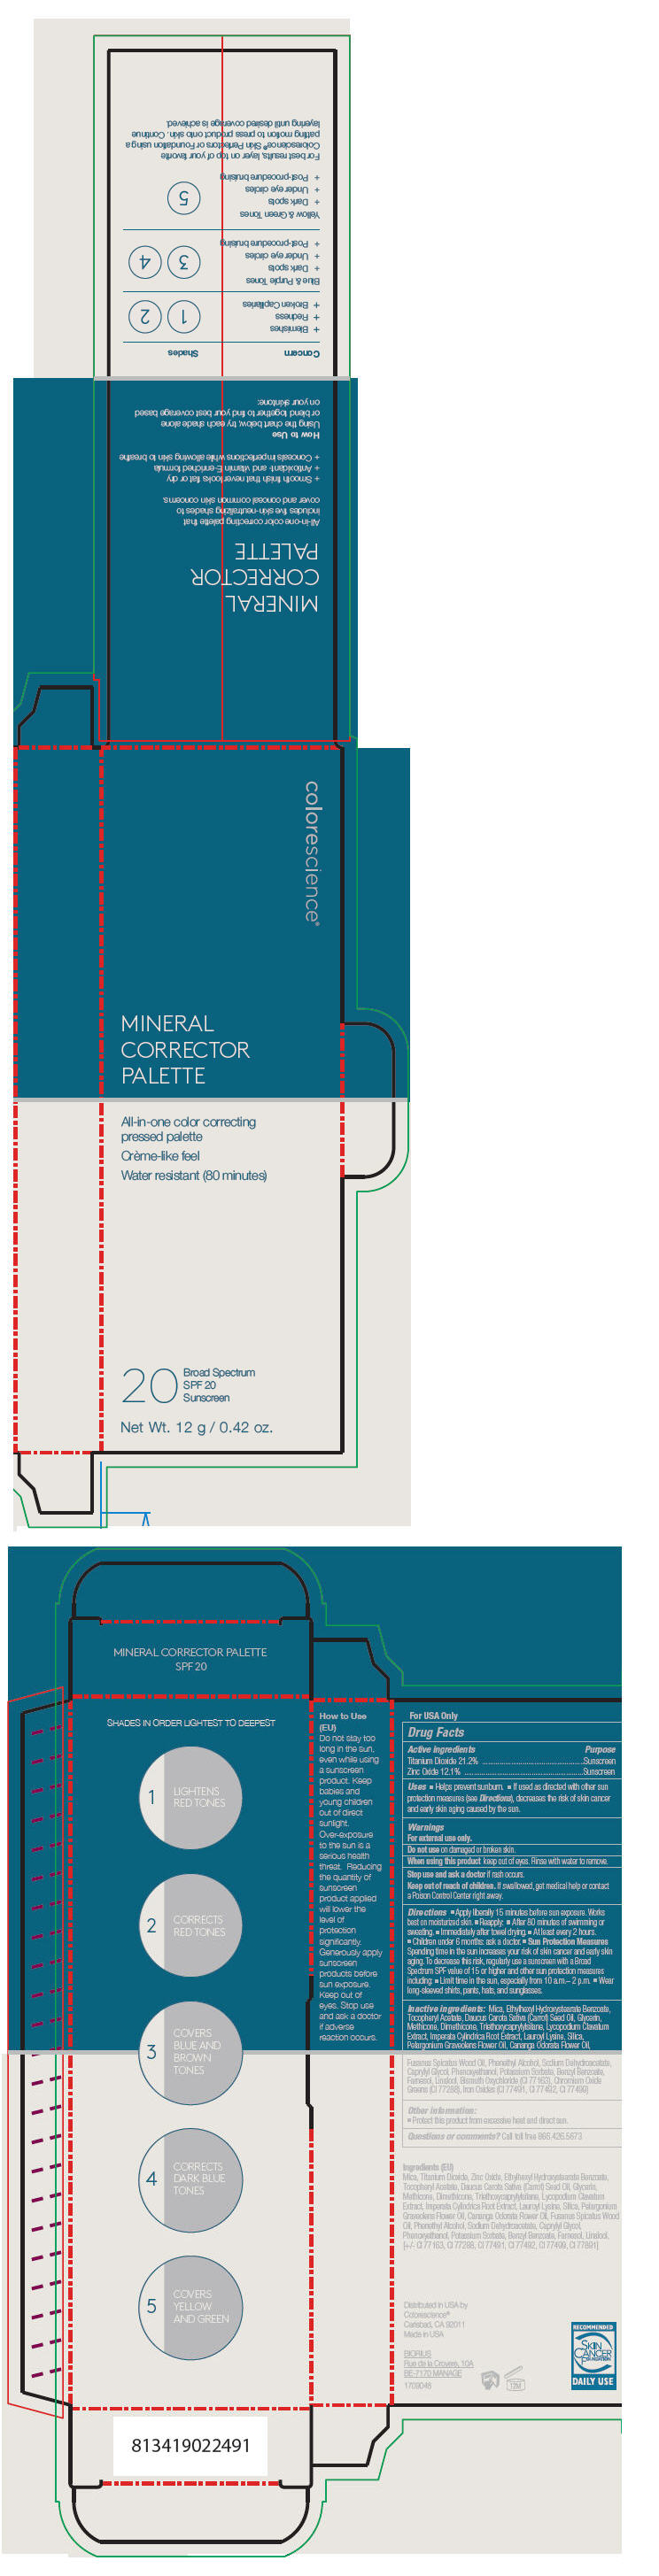 PRINCIPAL DISPLAY PANEL - 12 g Container Carton